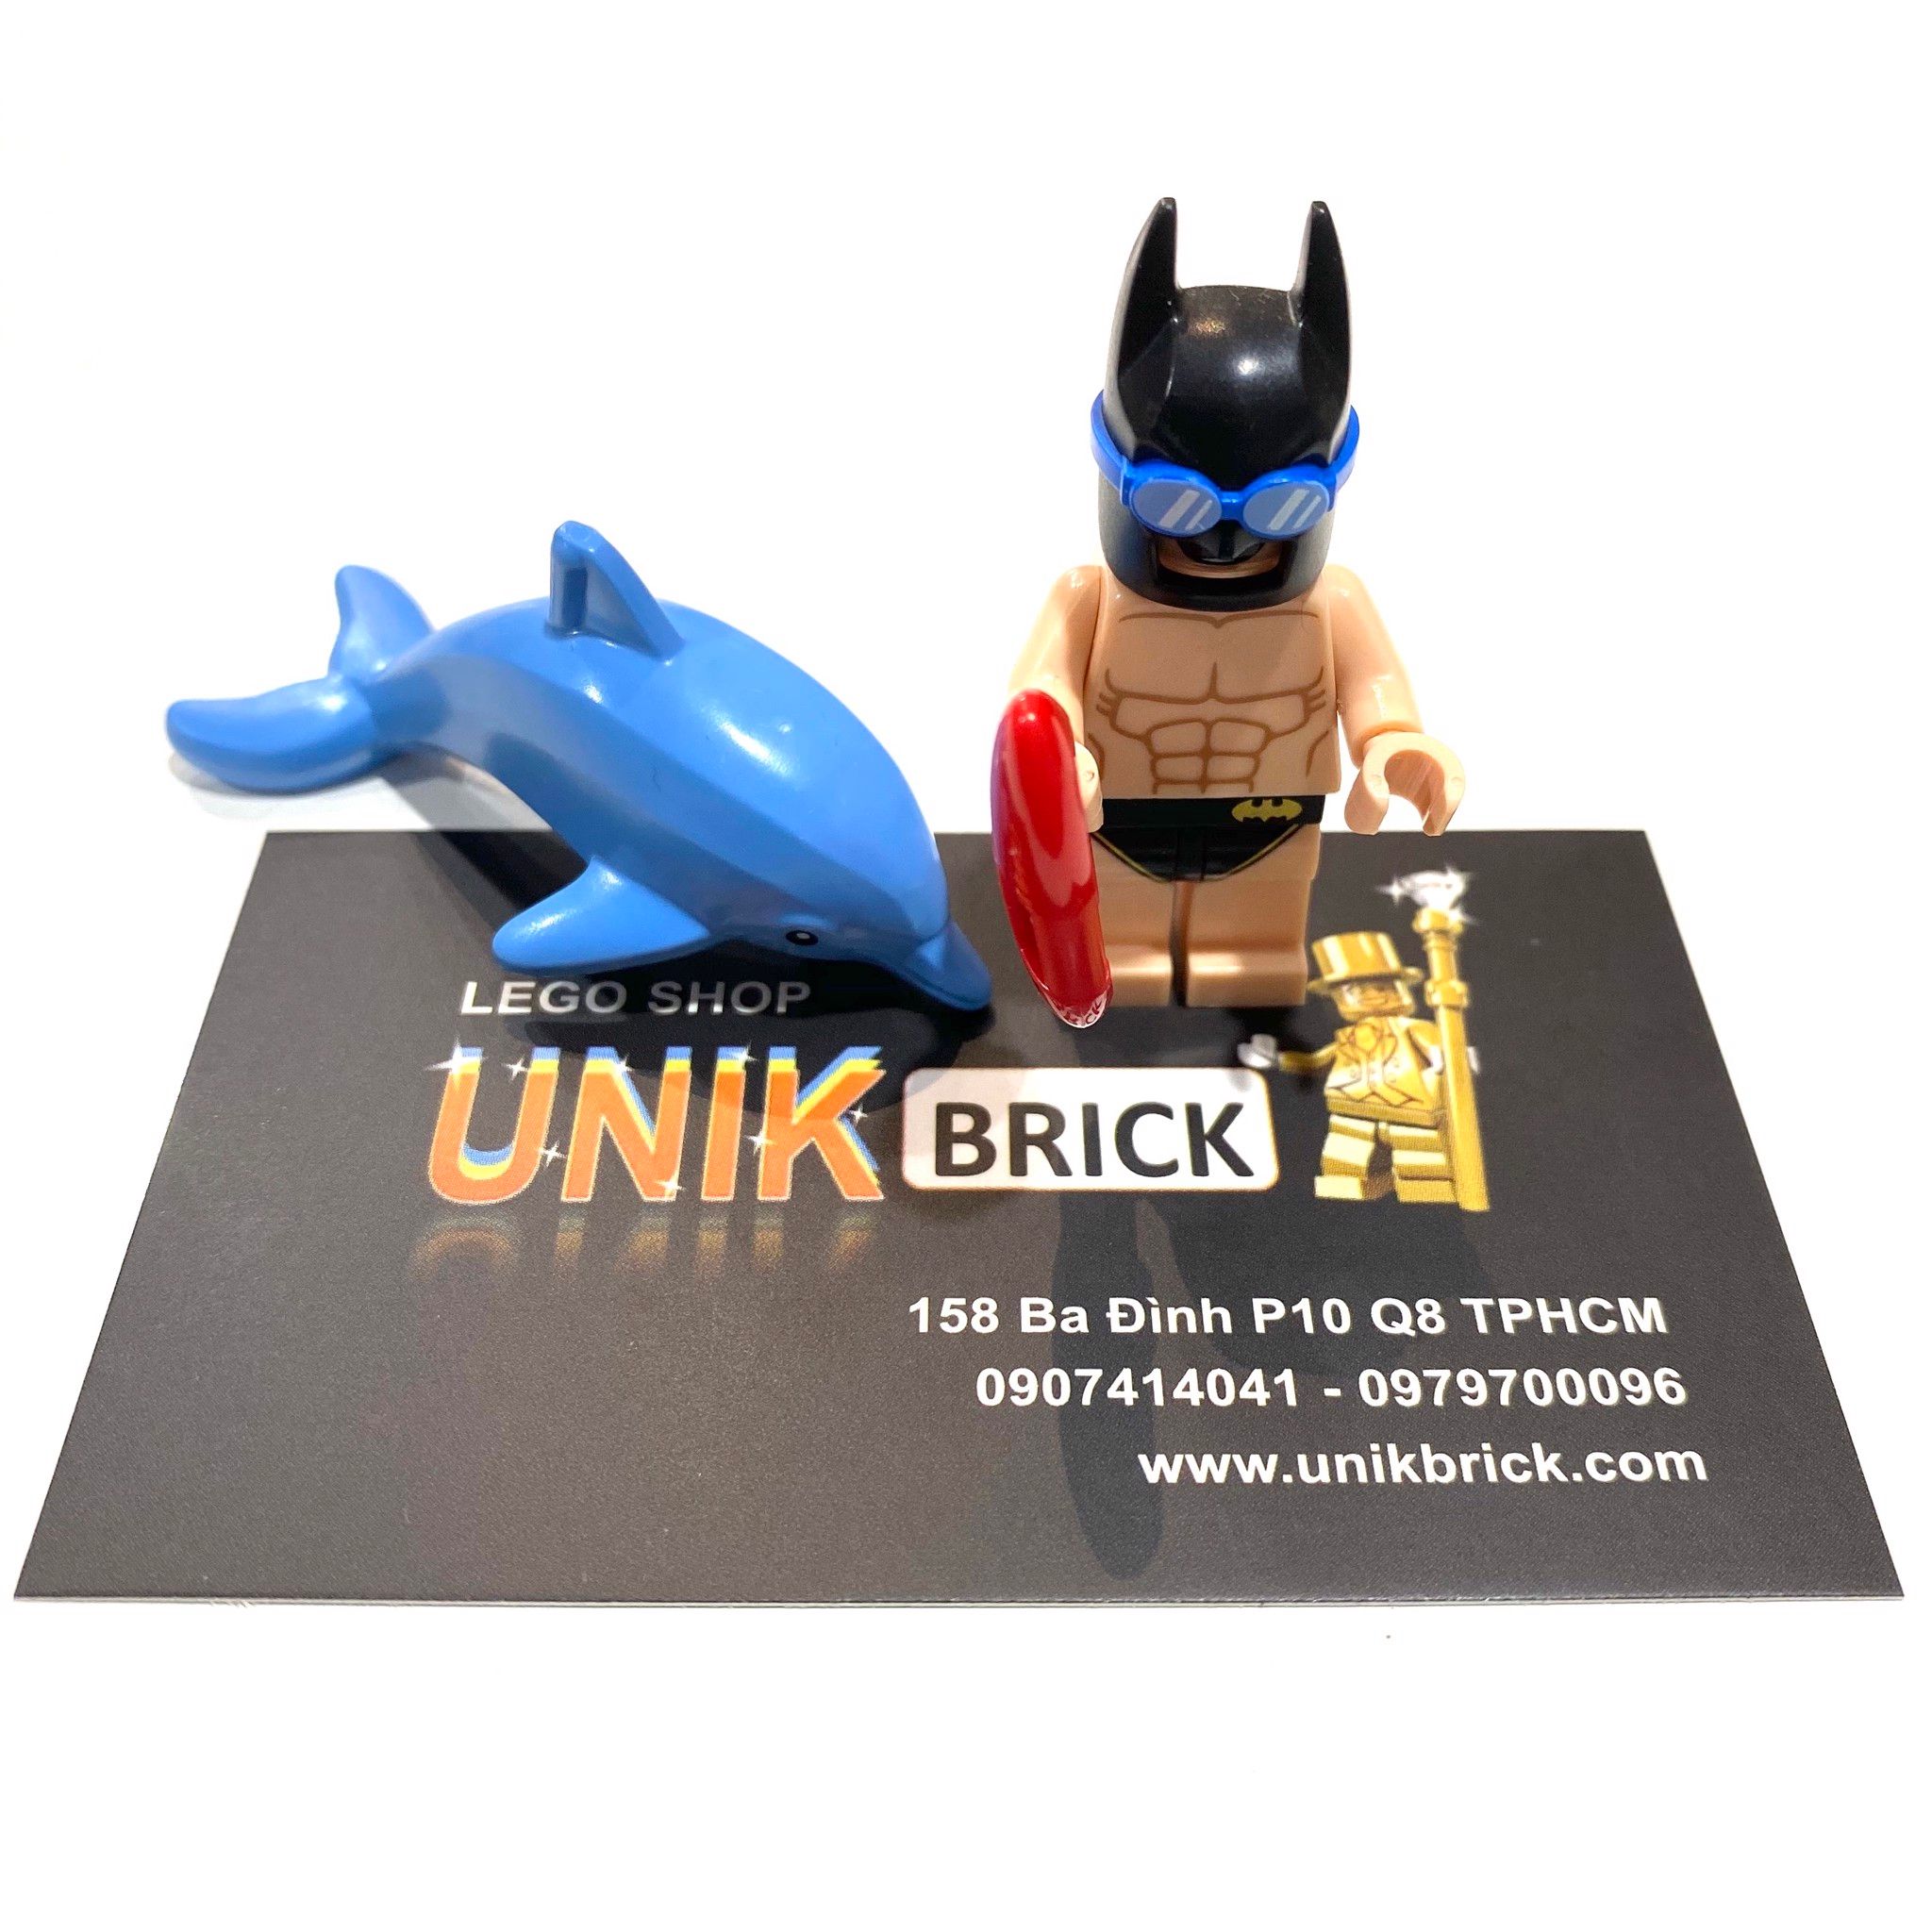 LEGO DC Beach Batman Movie Series 2 – UNIK BRICK